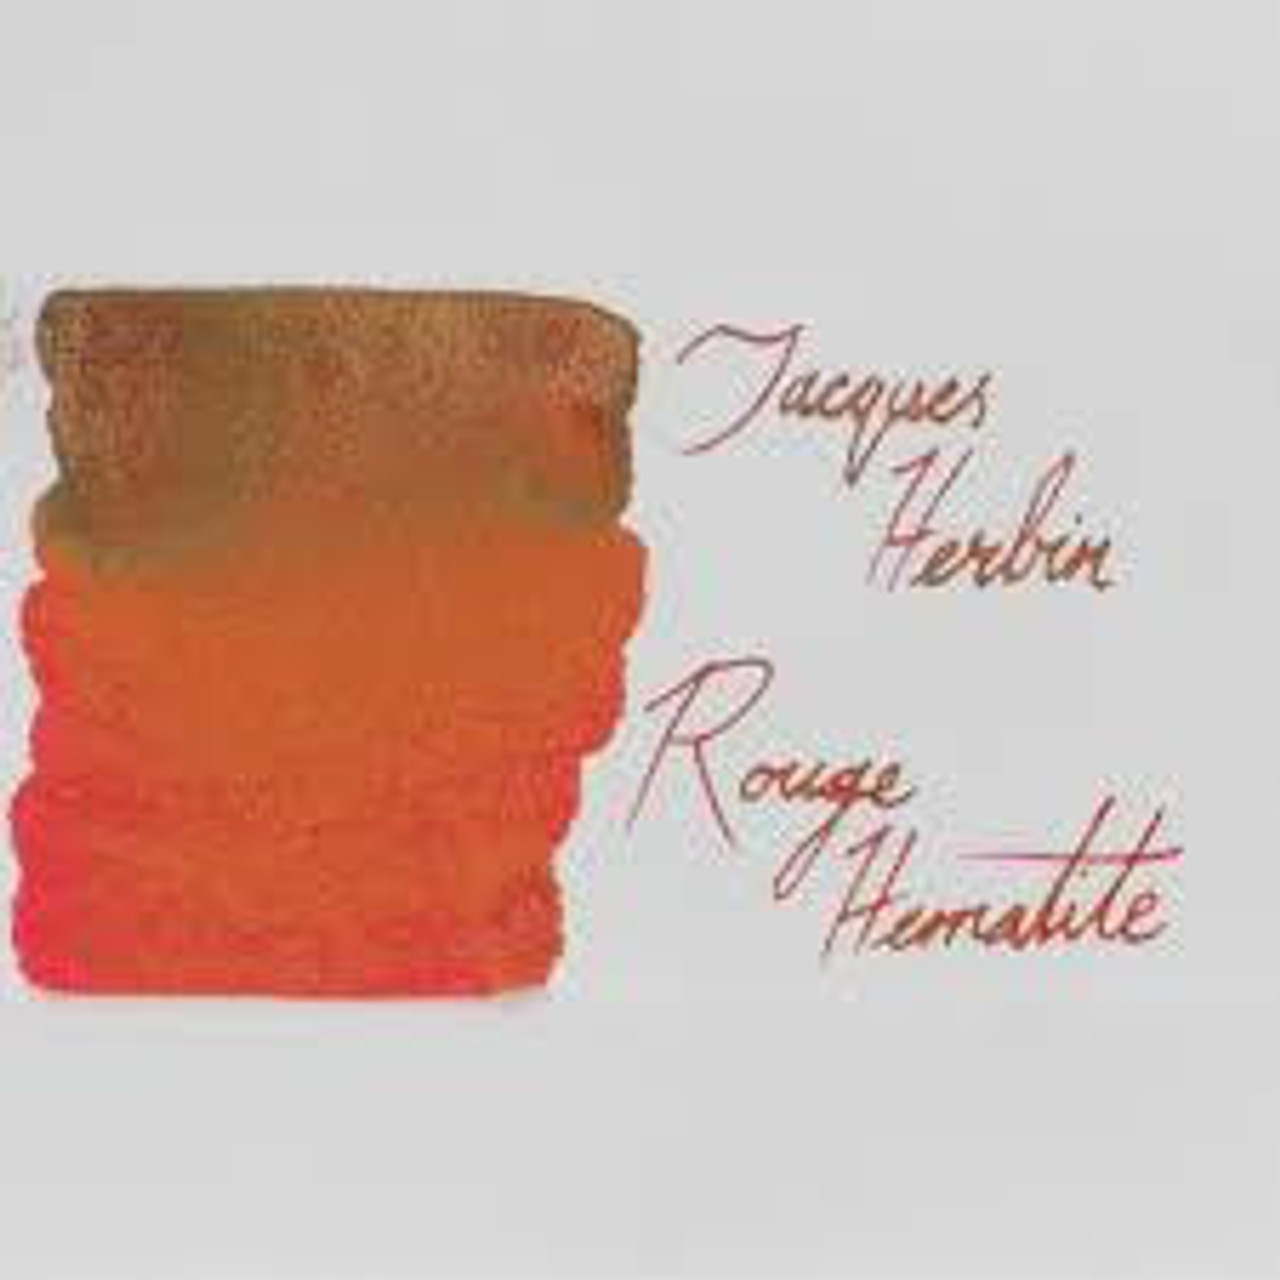 Jacques Herbin 1670 Rouge Hematite - 50ml Bottled Fountain Pen Ink